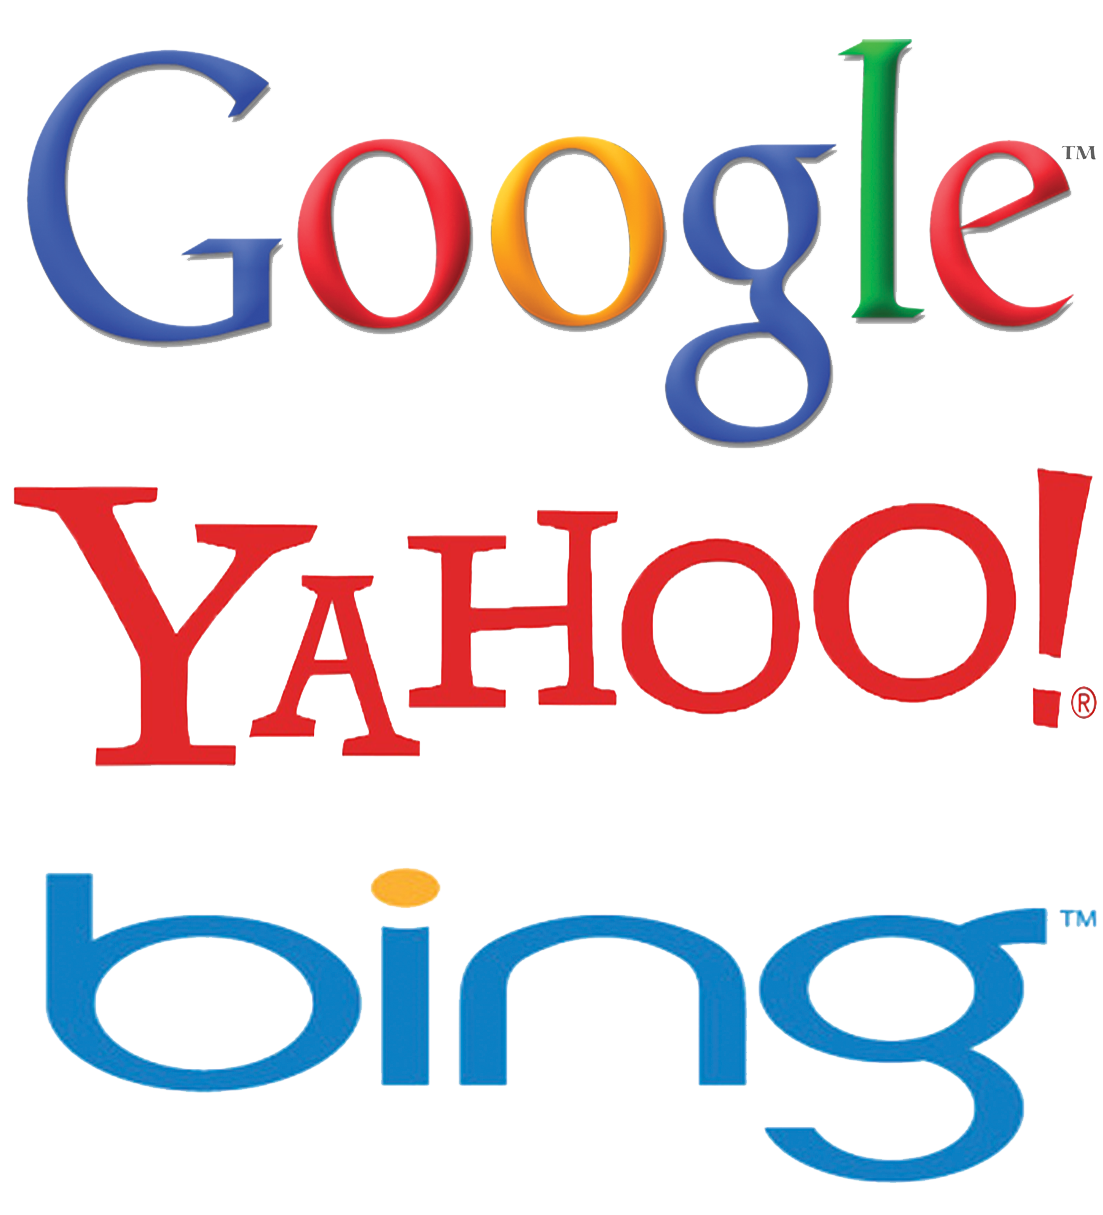 Search-Engine-Google-Yahoo-Bing